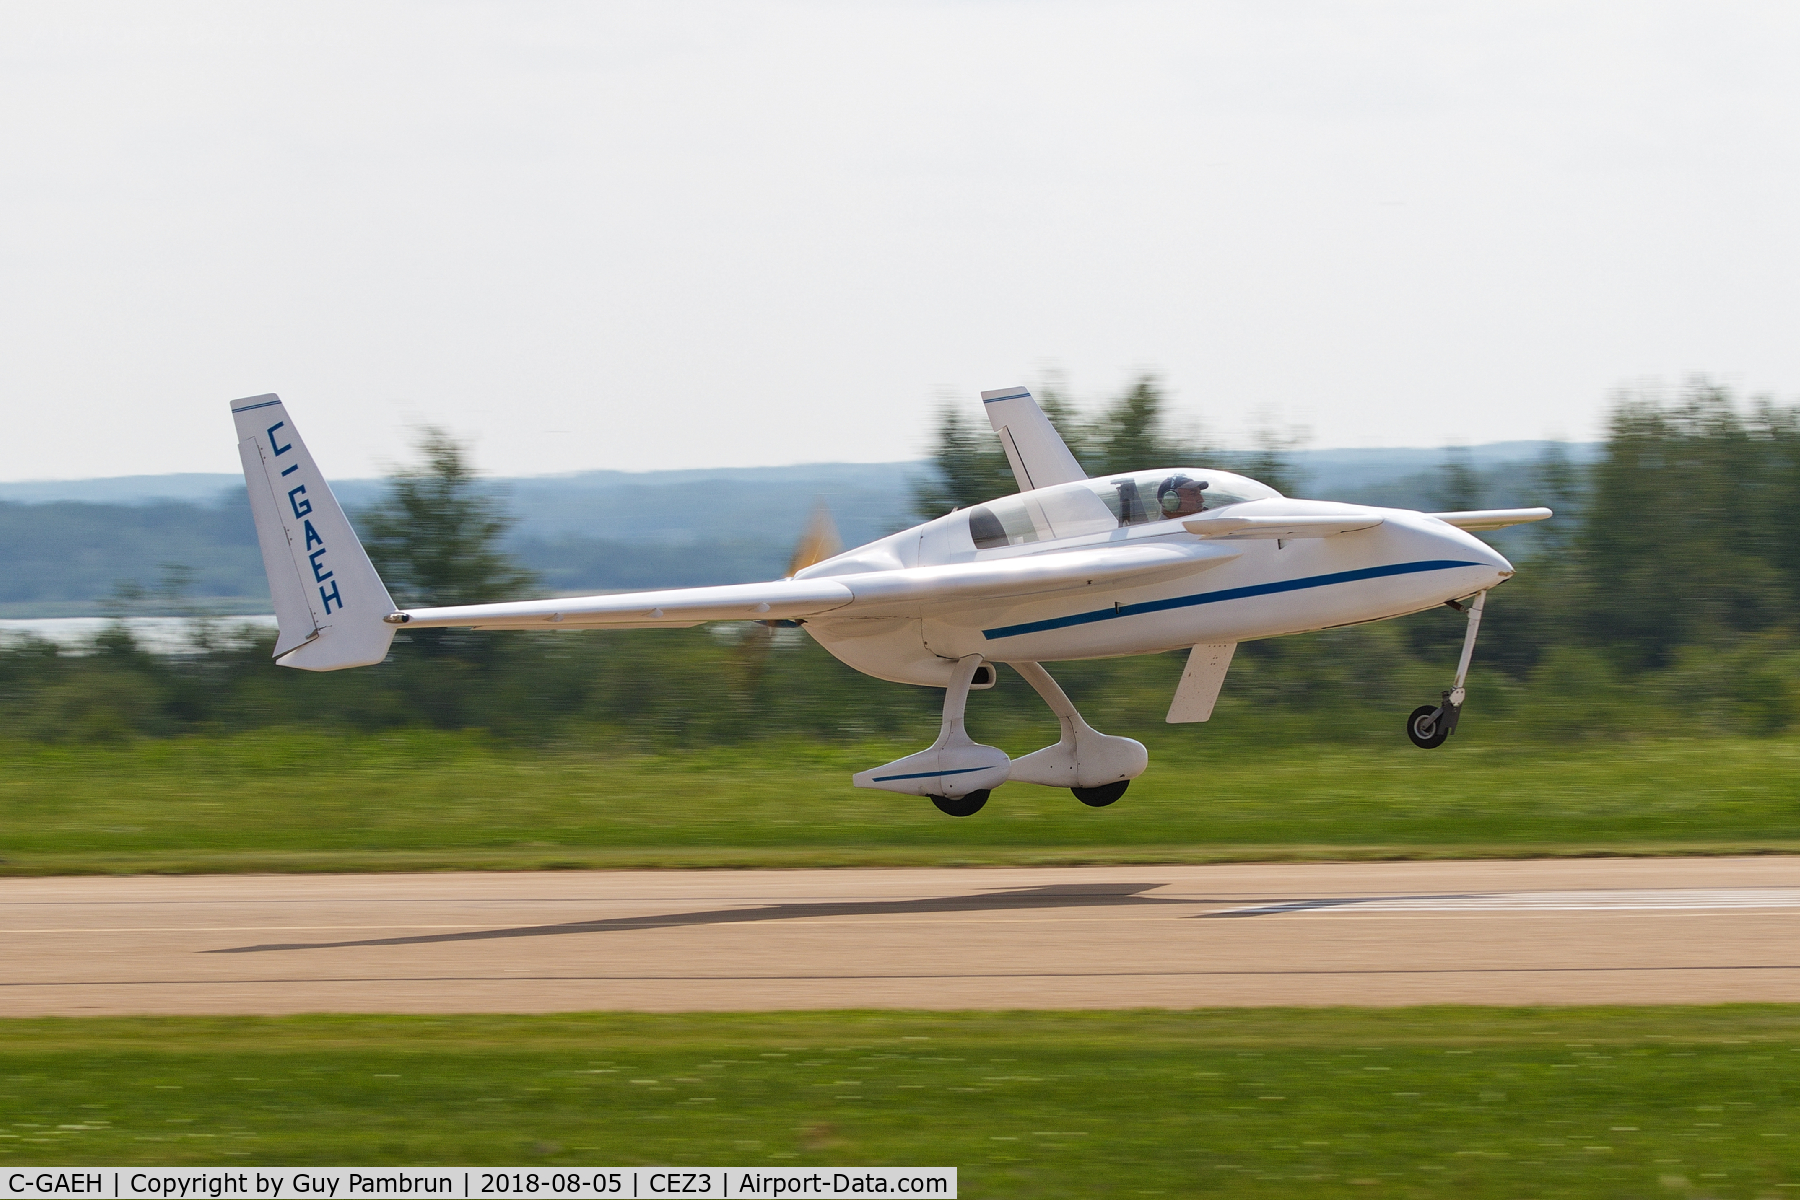 C-GAEH, 1993 Rutan Long-EZ C/N 1699, Landing